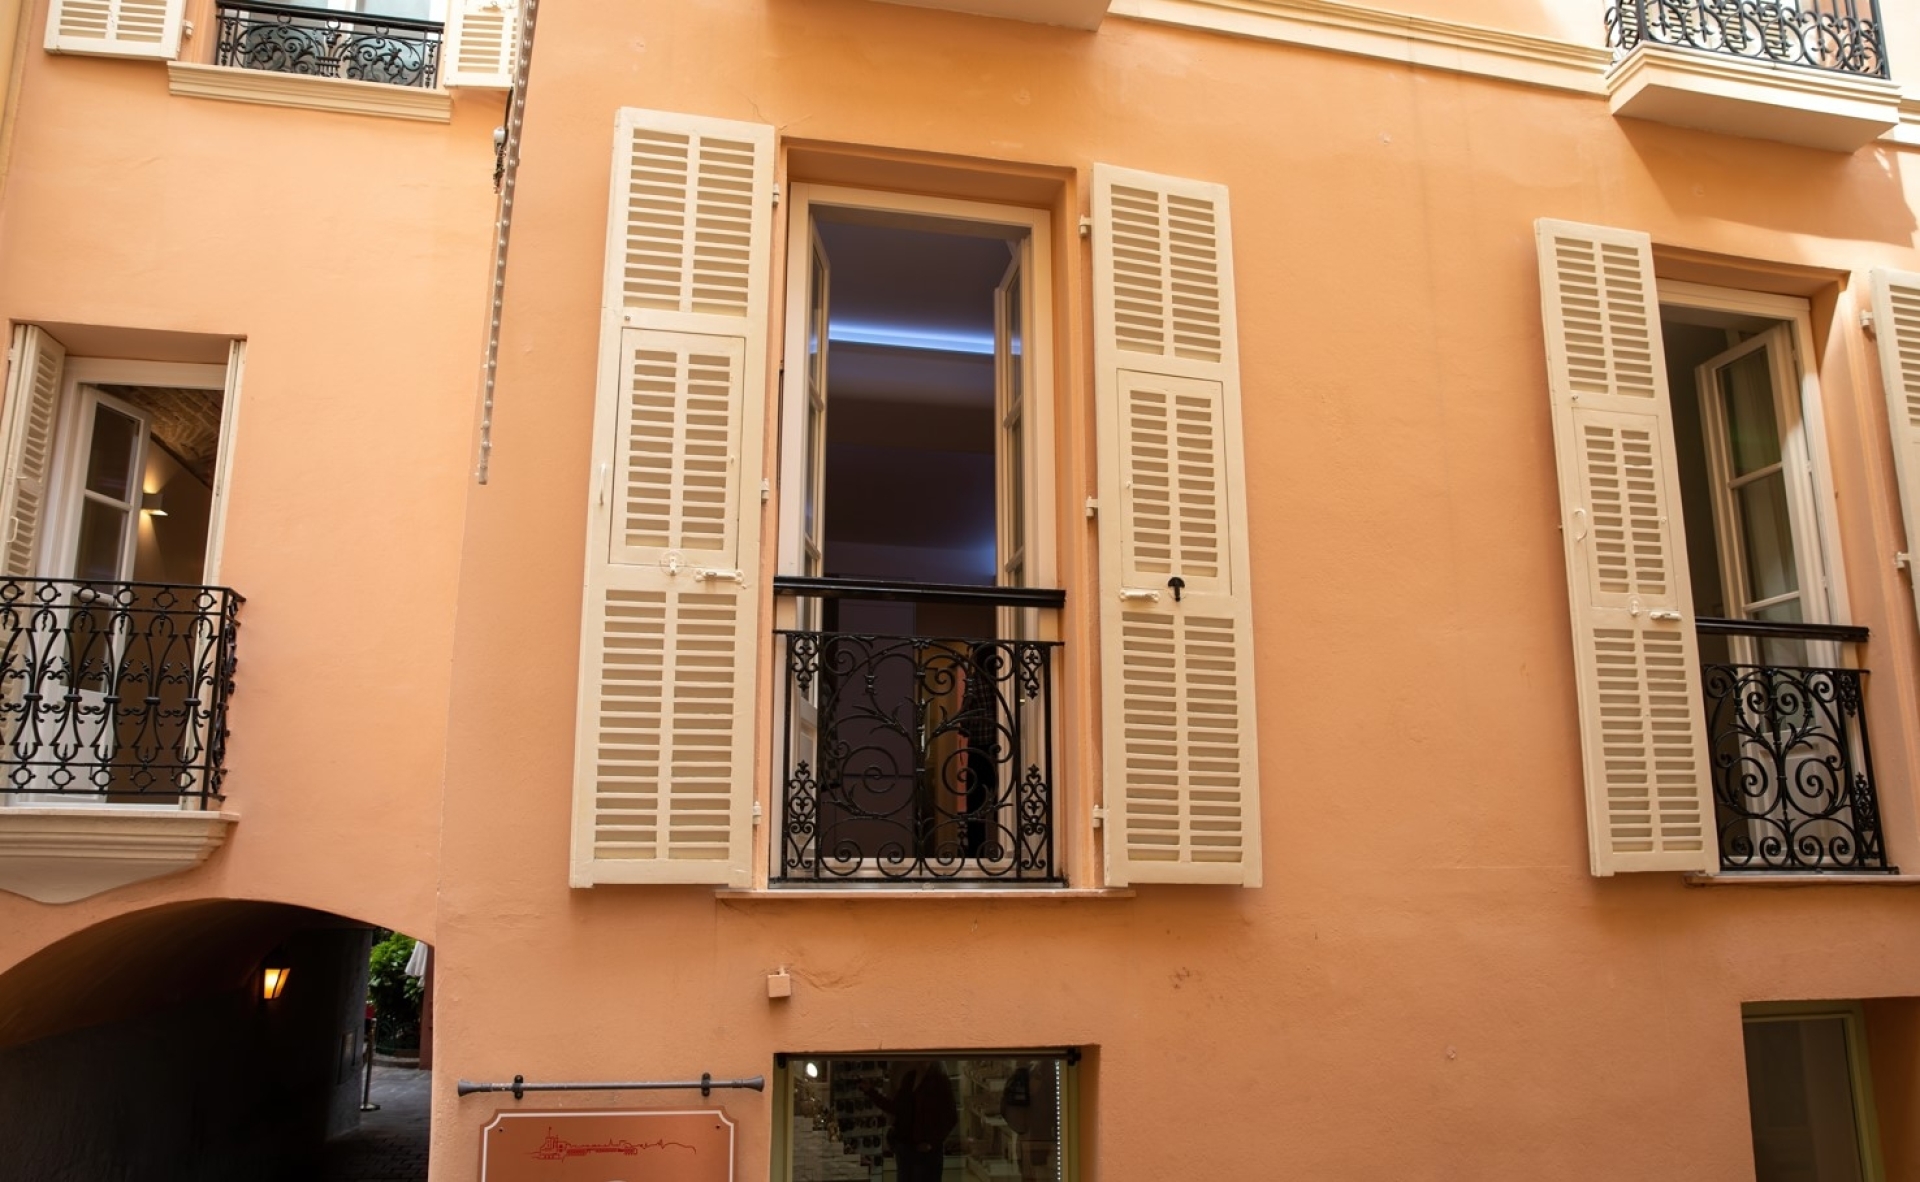 Dotta Appartement de 4 pieces a vendre - 32 rue Felix Gastaldi - Monaco-Ville - Monaco - img1